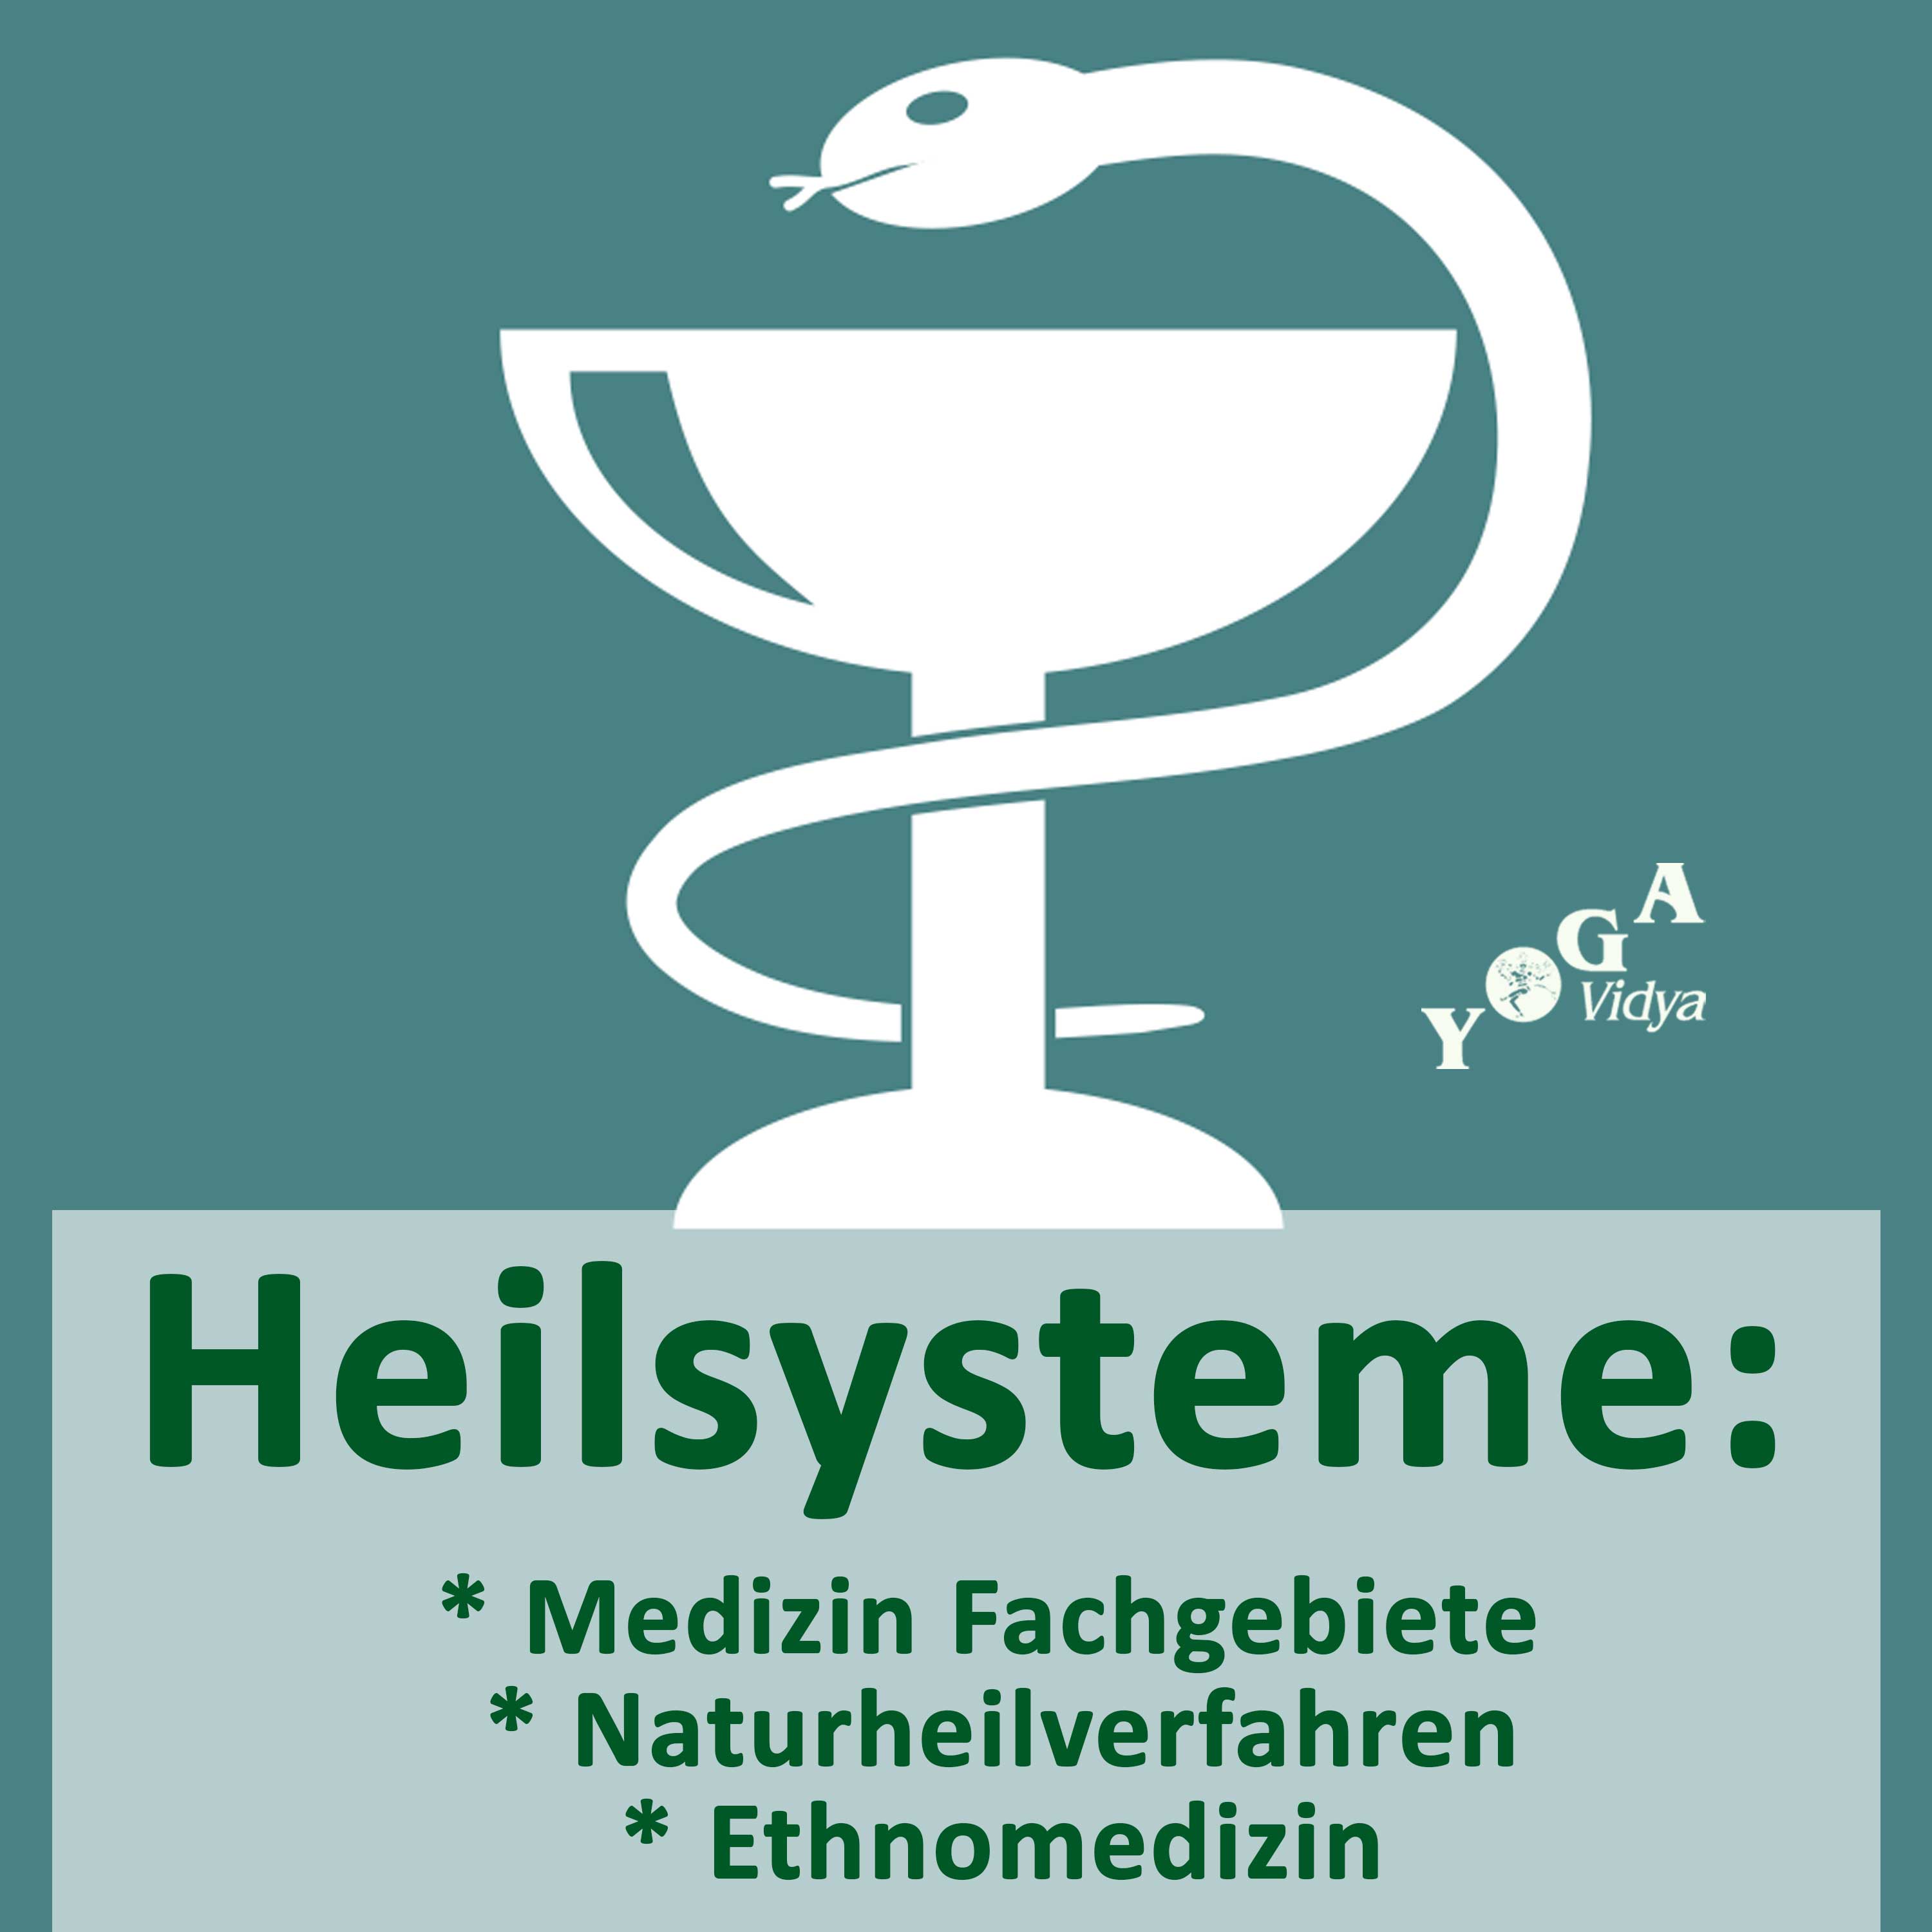 Heilsysteme: Medizin Fachgebiete, Naturheilverfahren, Ethnomedizin Podcast artwork